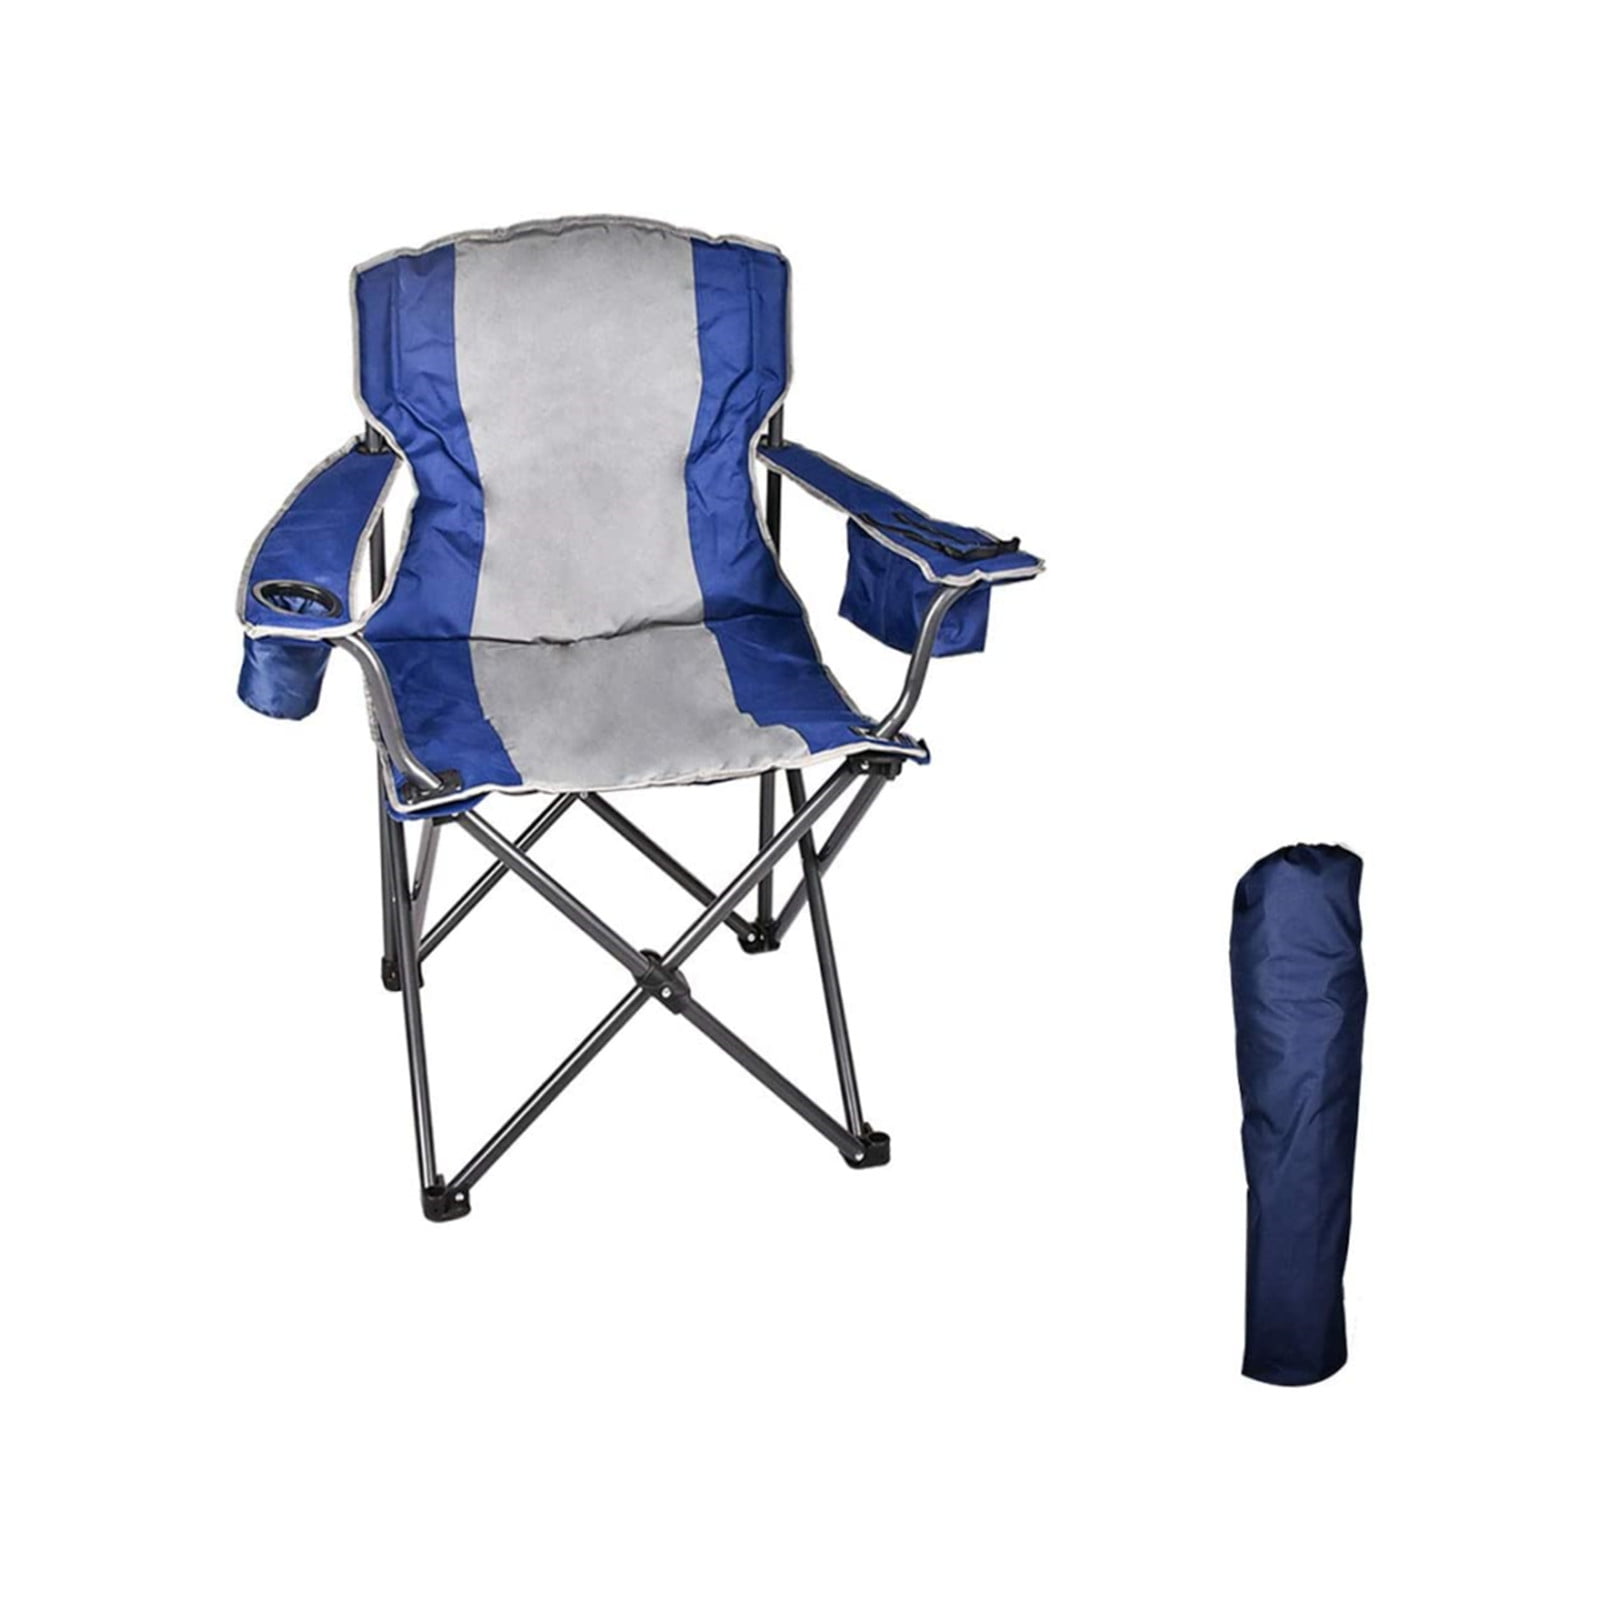 Outdoor Camping Chairs Walmart Shop, 57% OFF | www.emanagreen.com